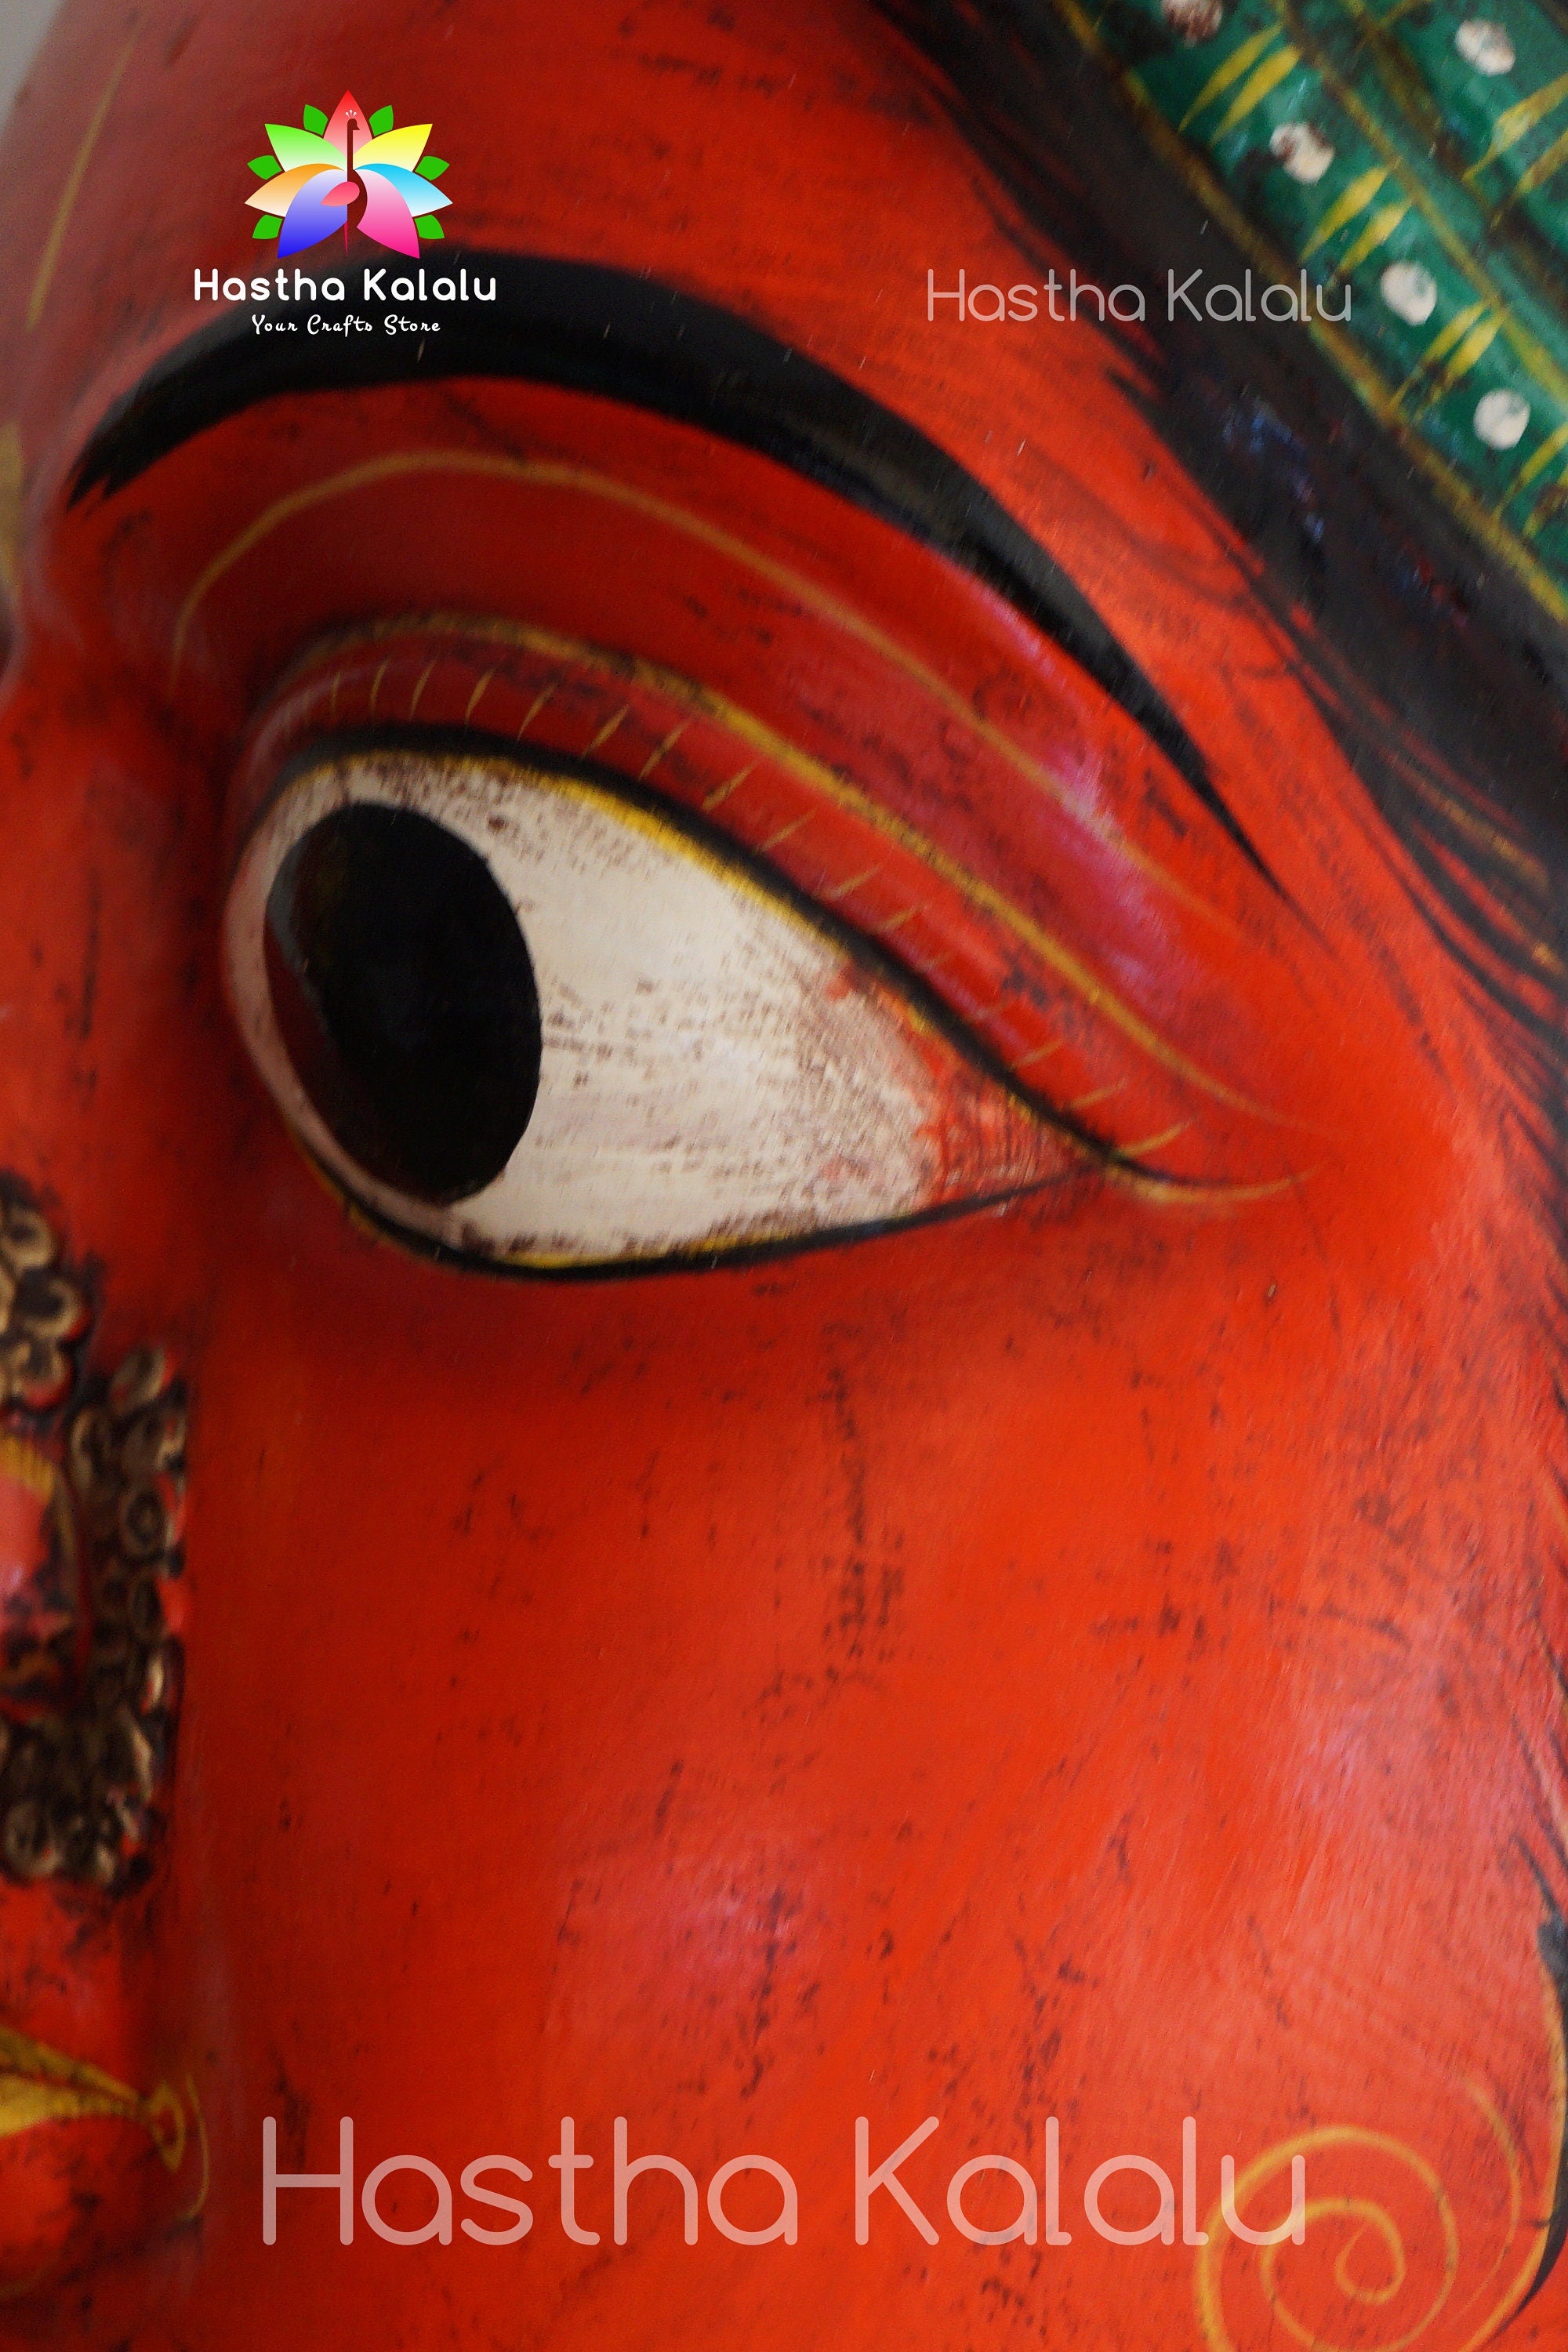 Handmade Wooden Red Gauri Head Figurines